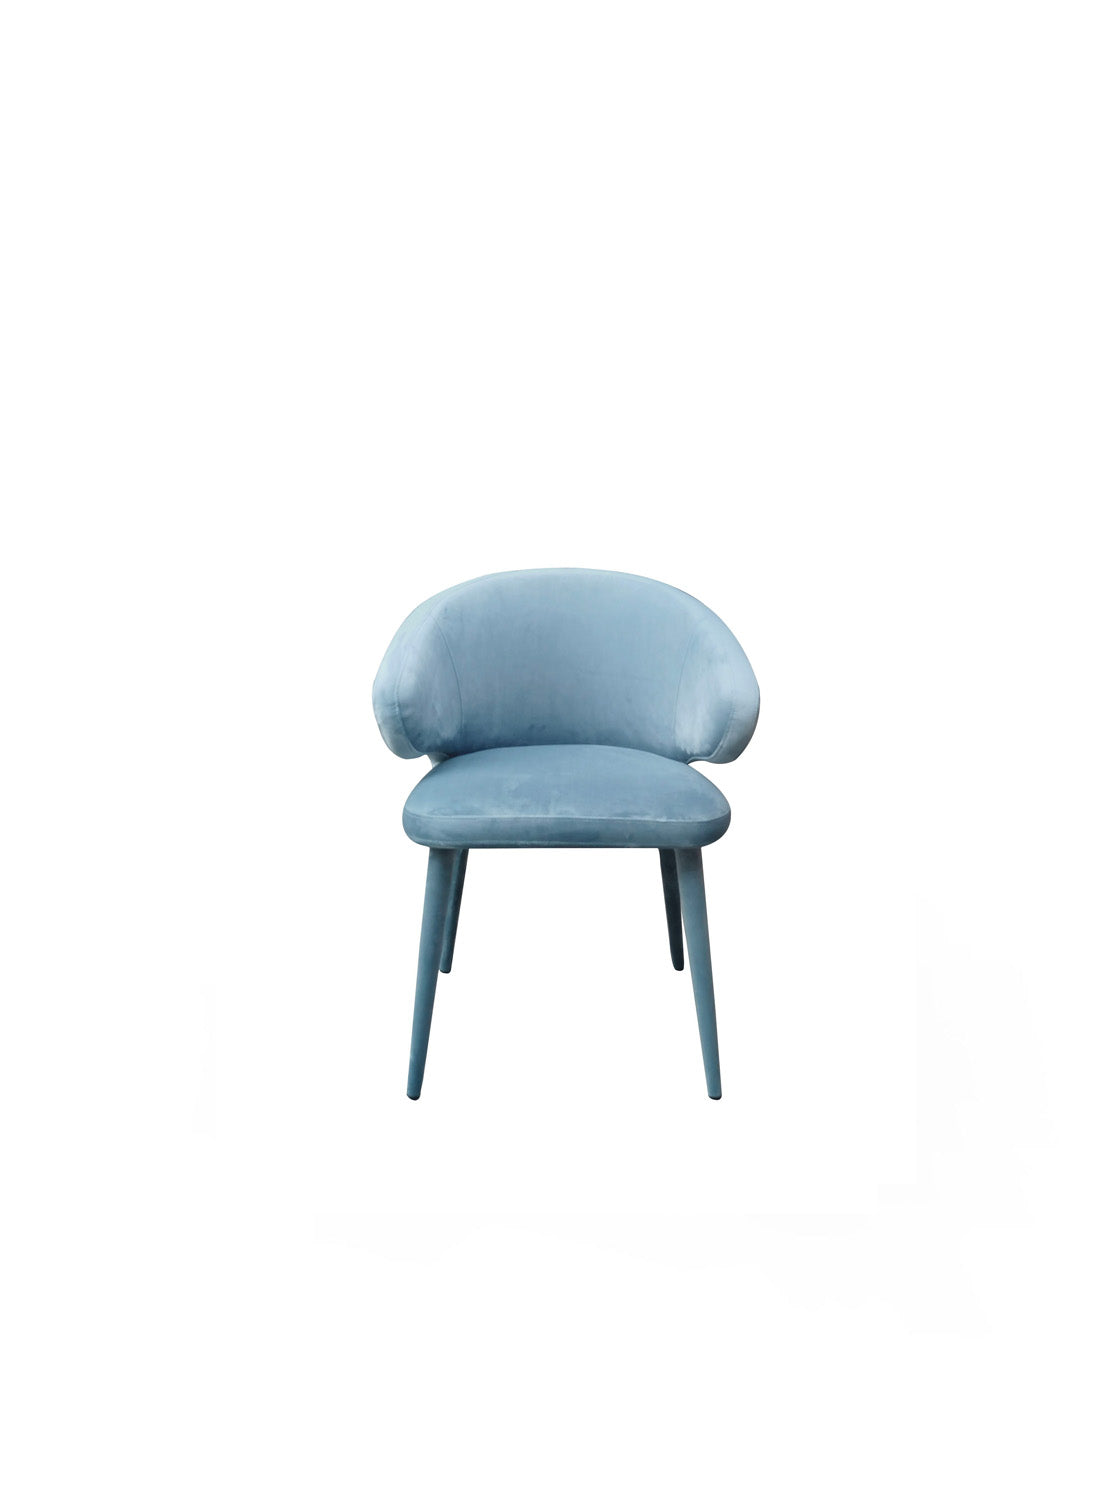 Lennon Dining Chair, blue grey